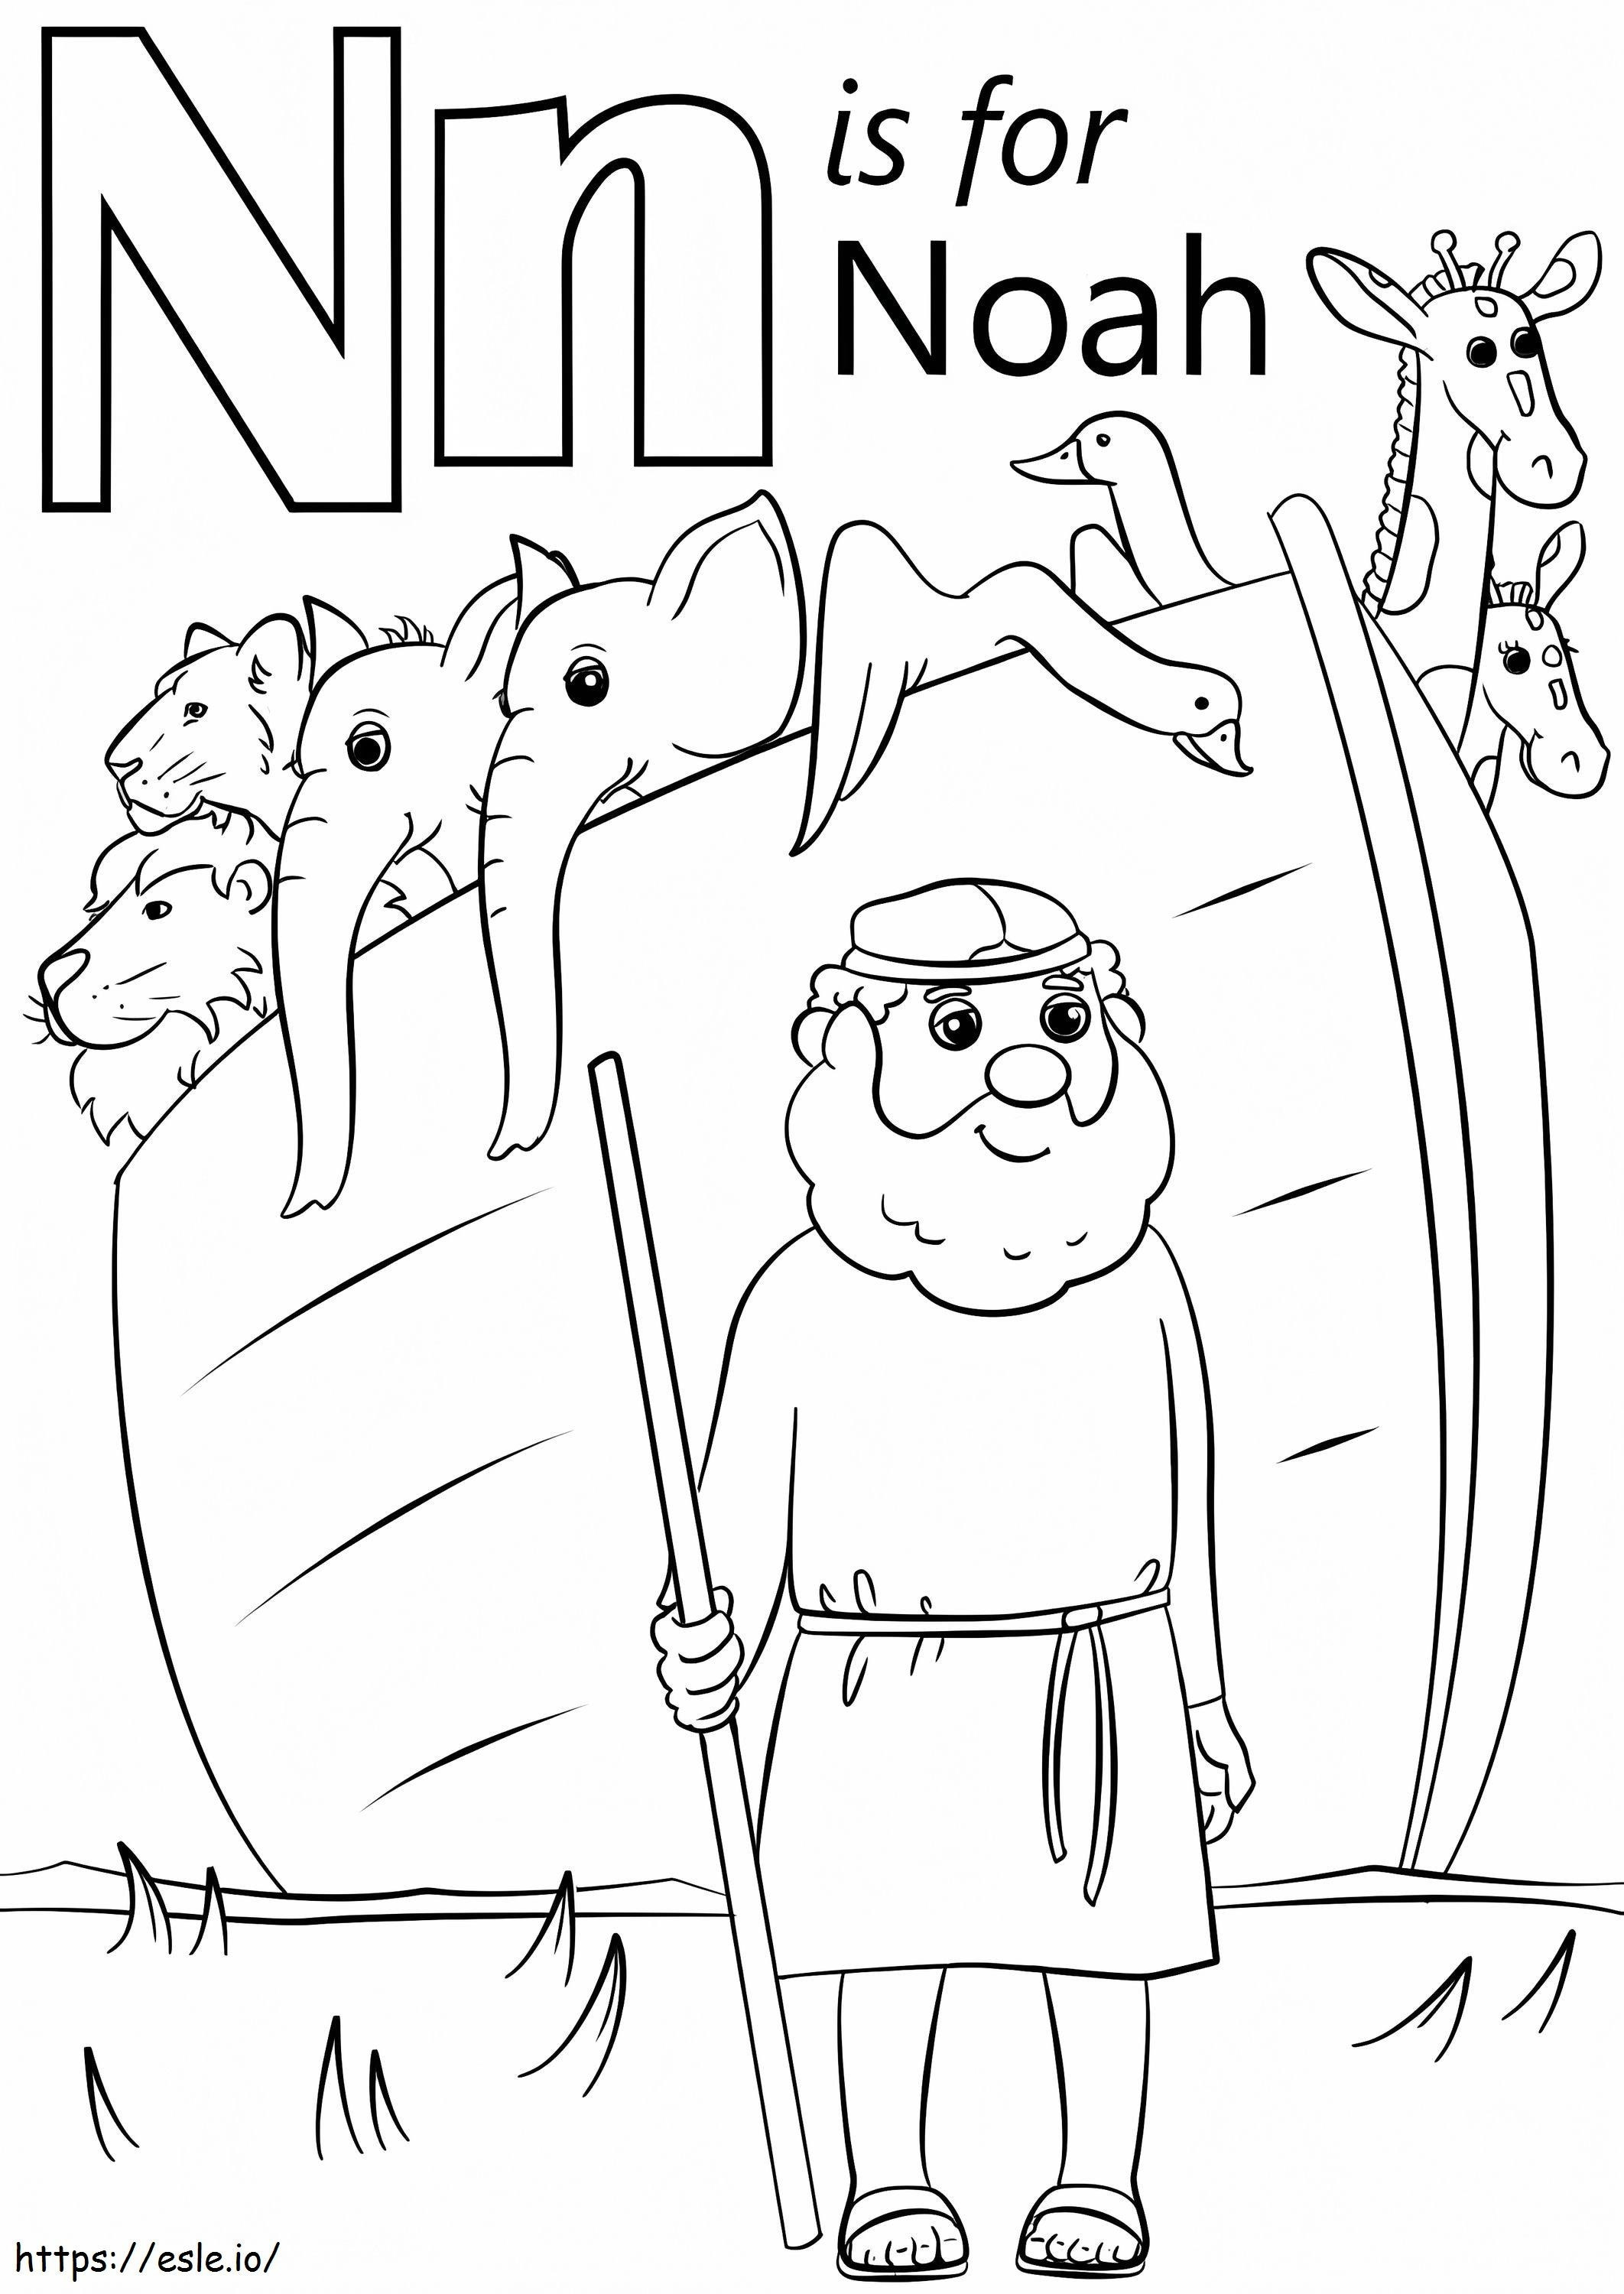 Noah Letter N coloring page